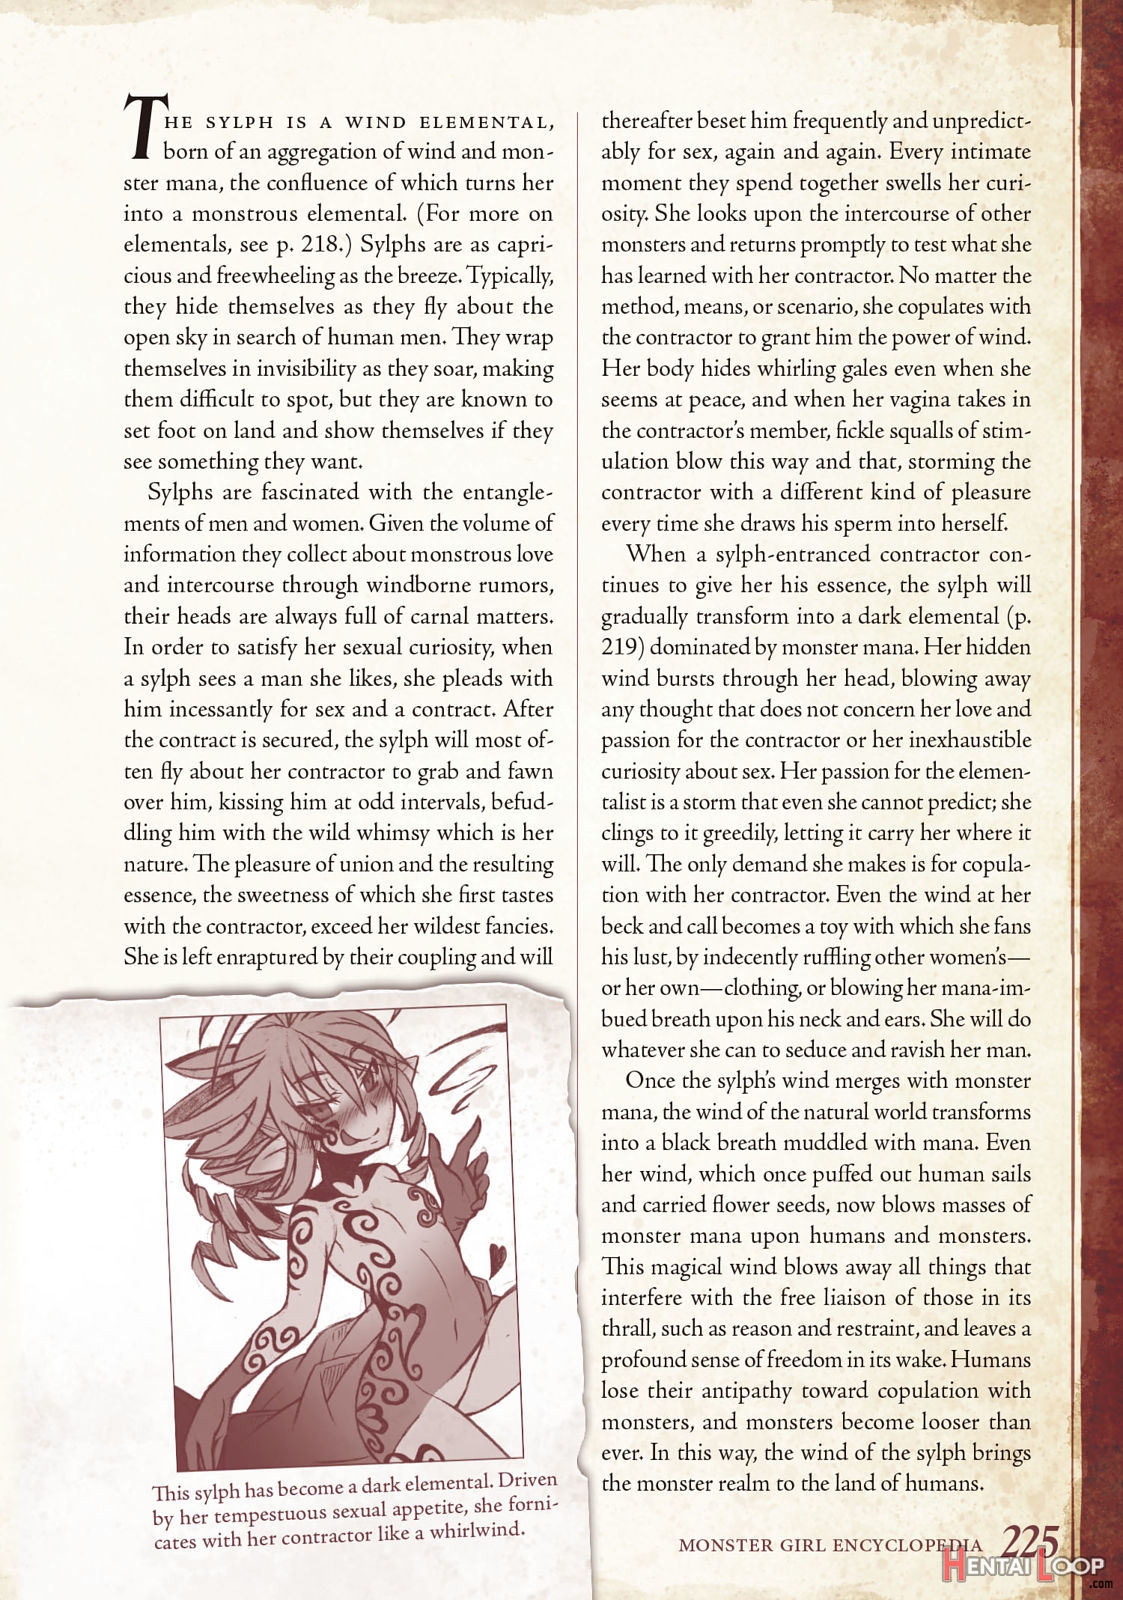 Monster Girl Encyclopedia Vol. 1 page 226